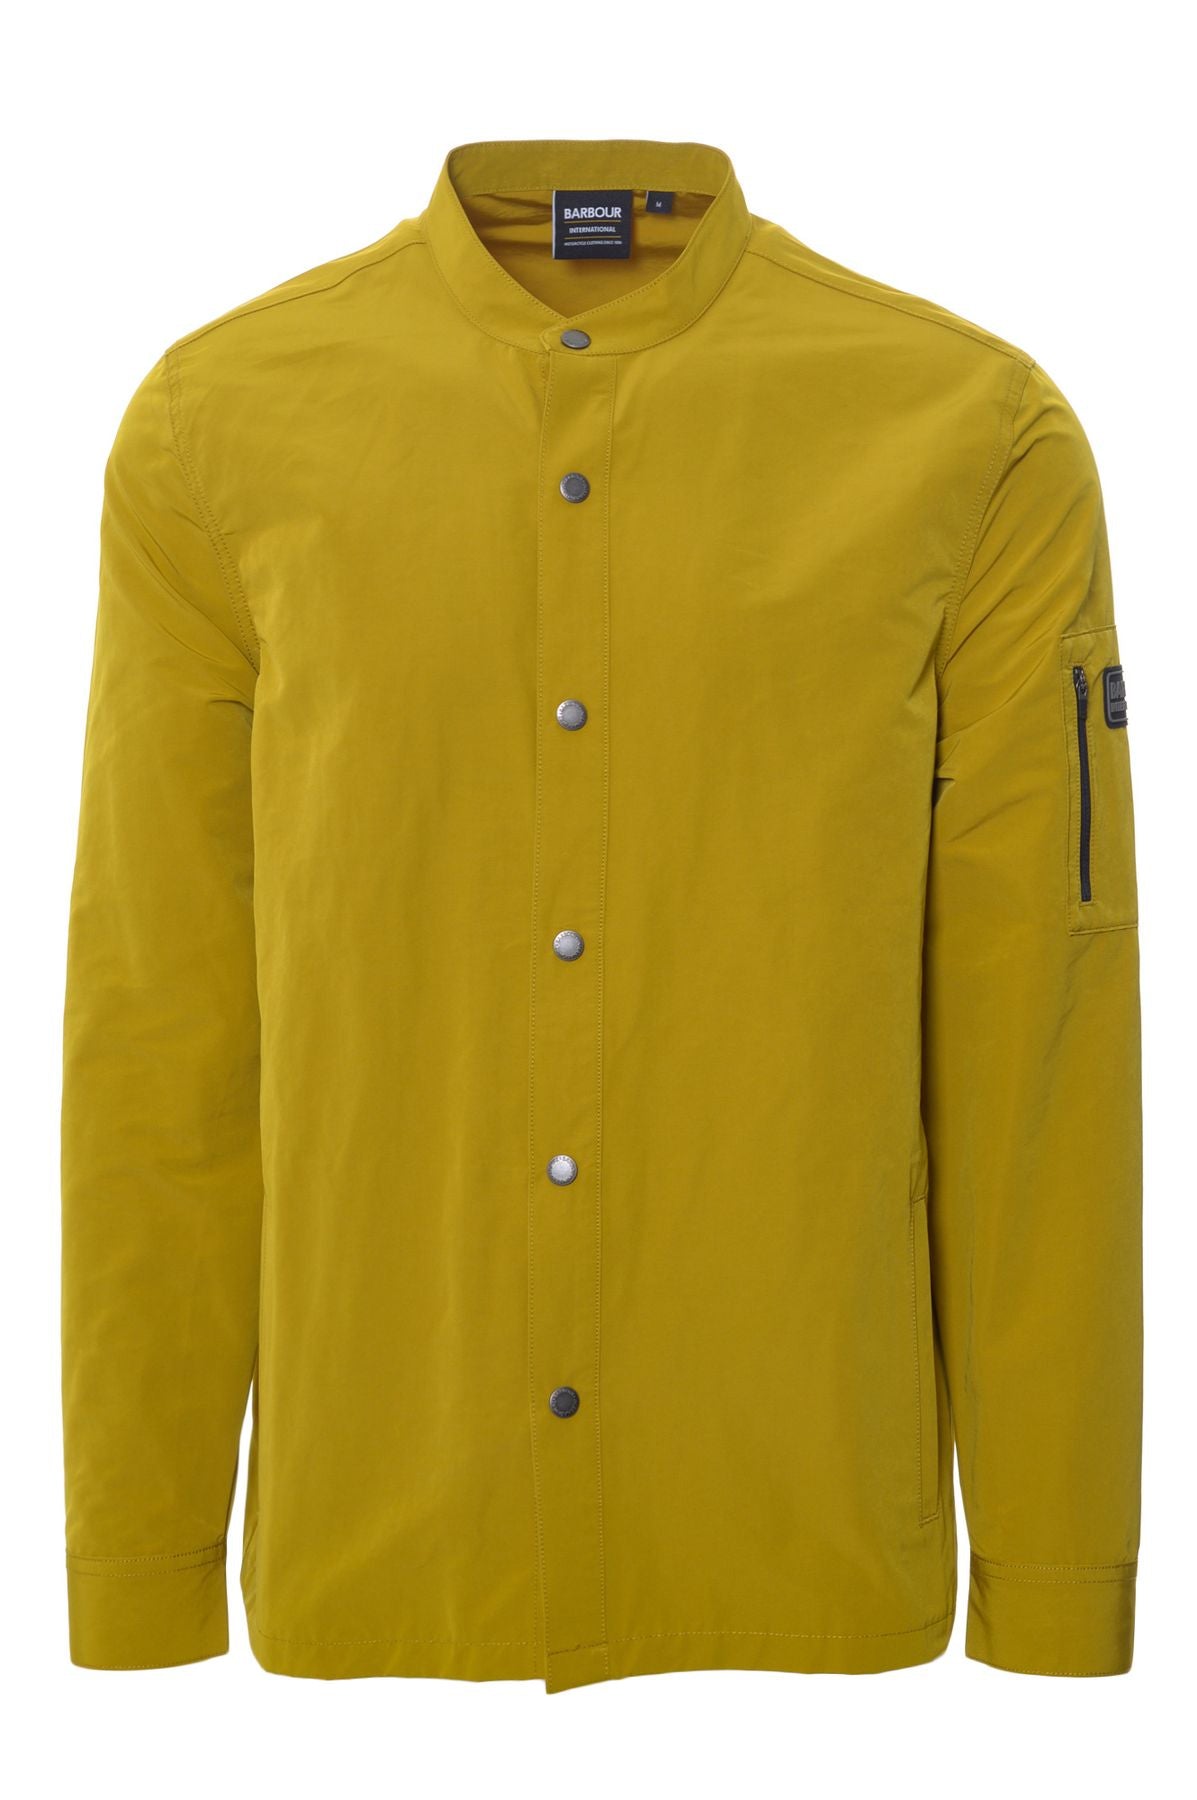 BARBOUR Spring/Summer Polyester Jackets